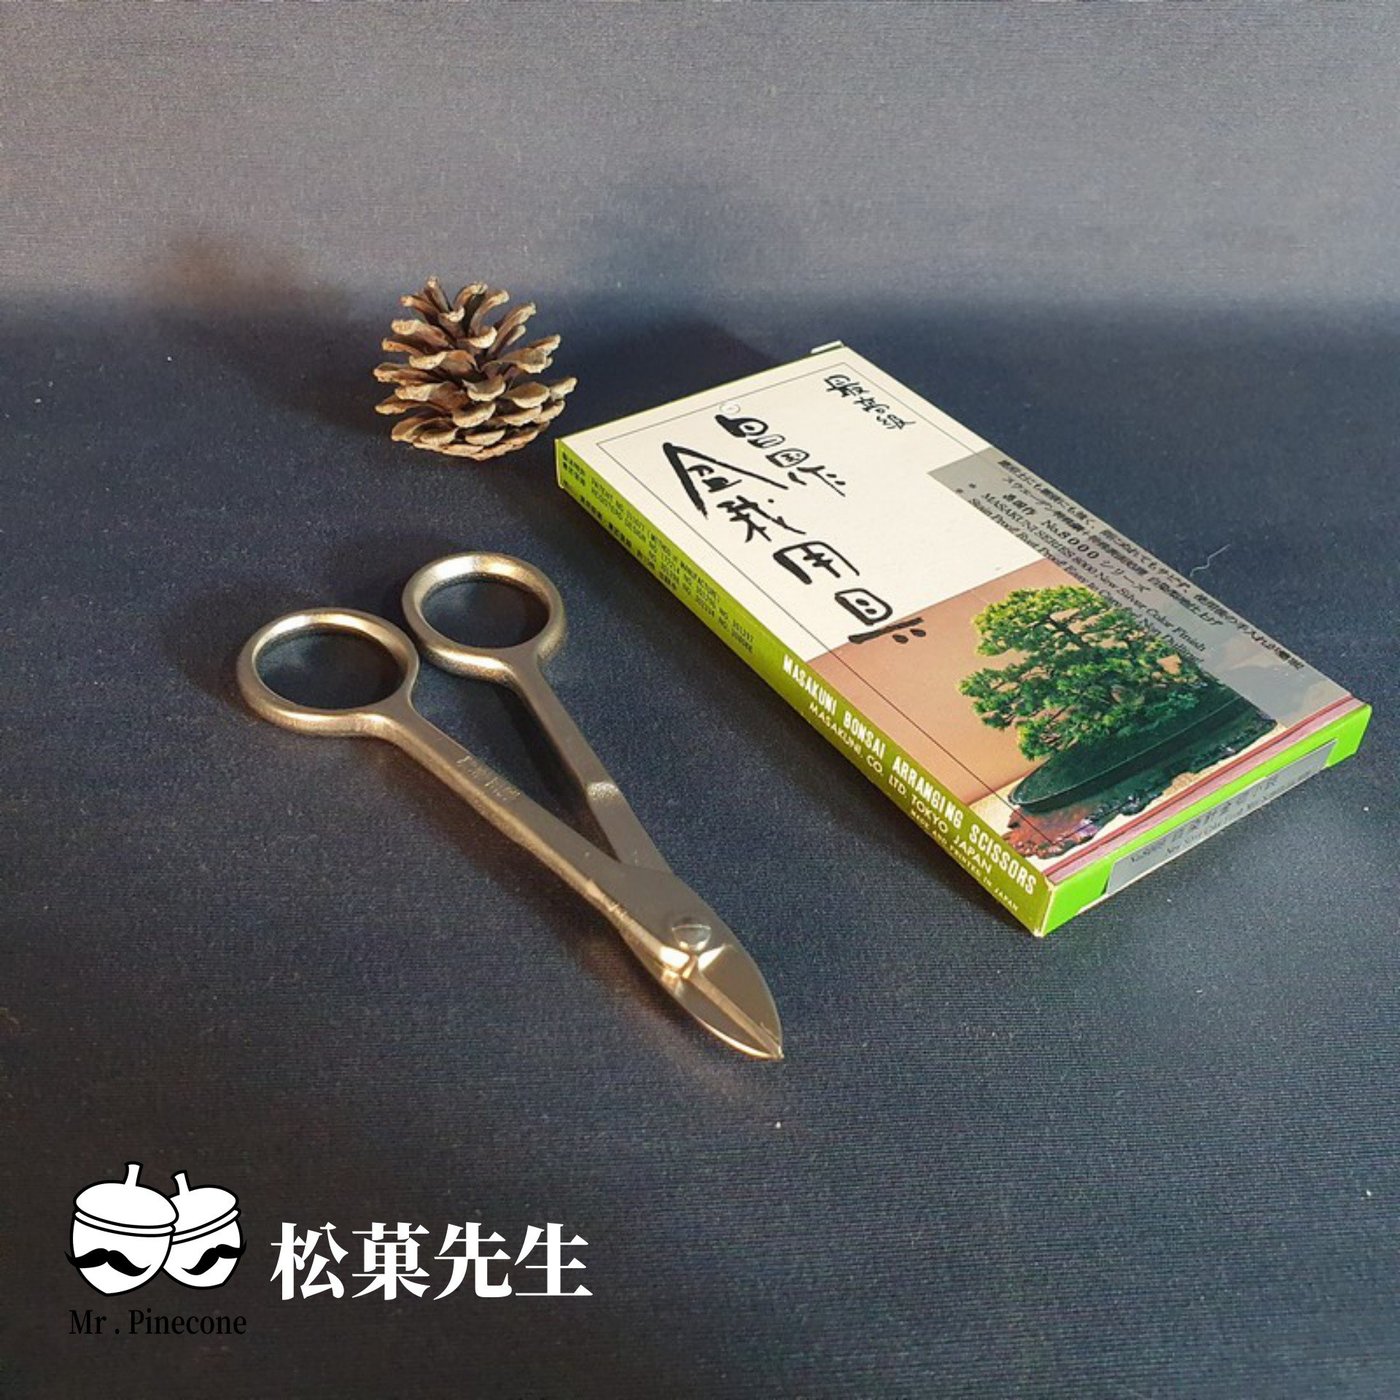 MASAKUNI】昌國作園藝工具最高級白染針金切小鋏NO:8009 日本製110mm 